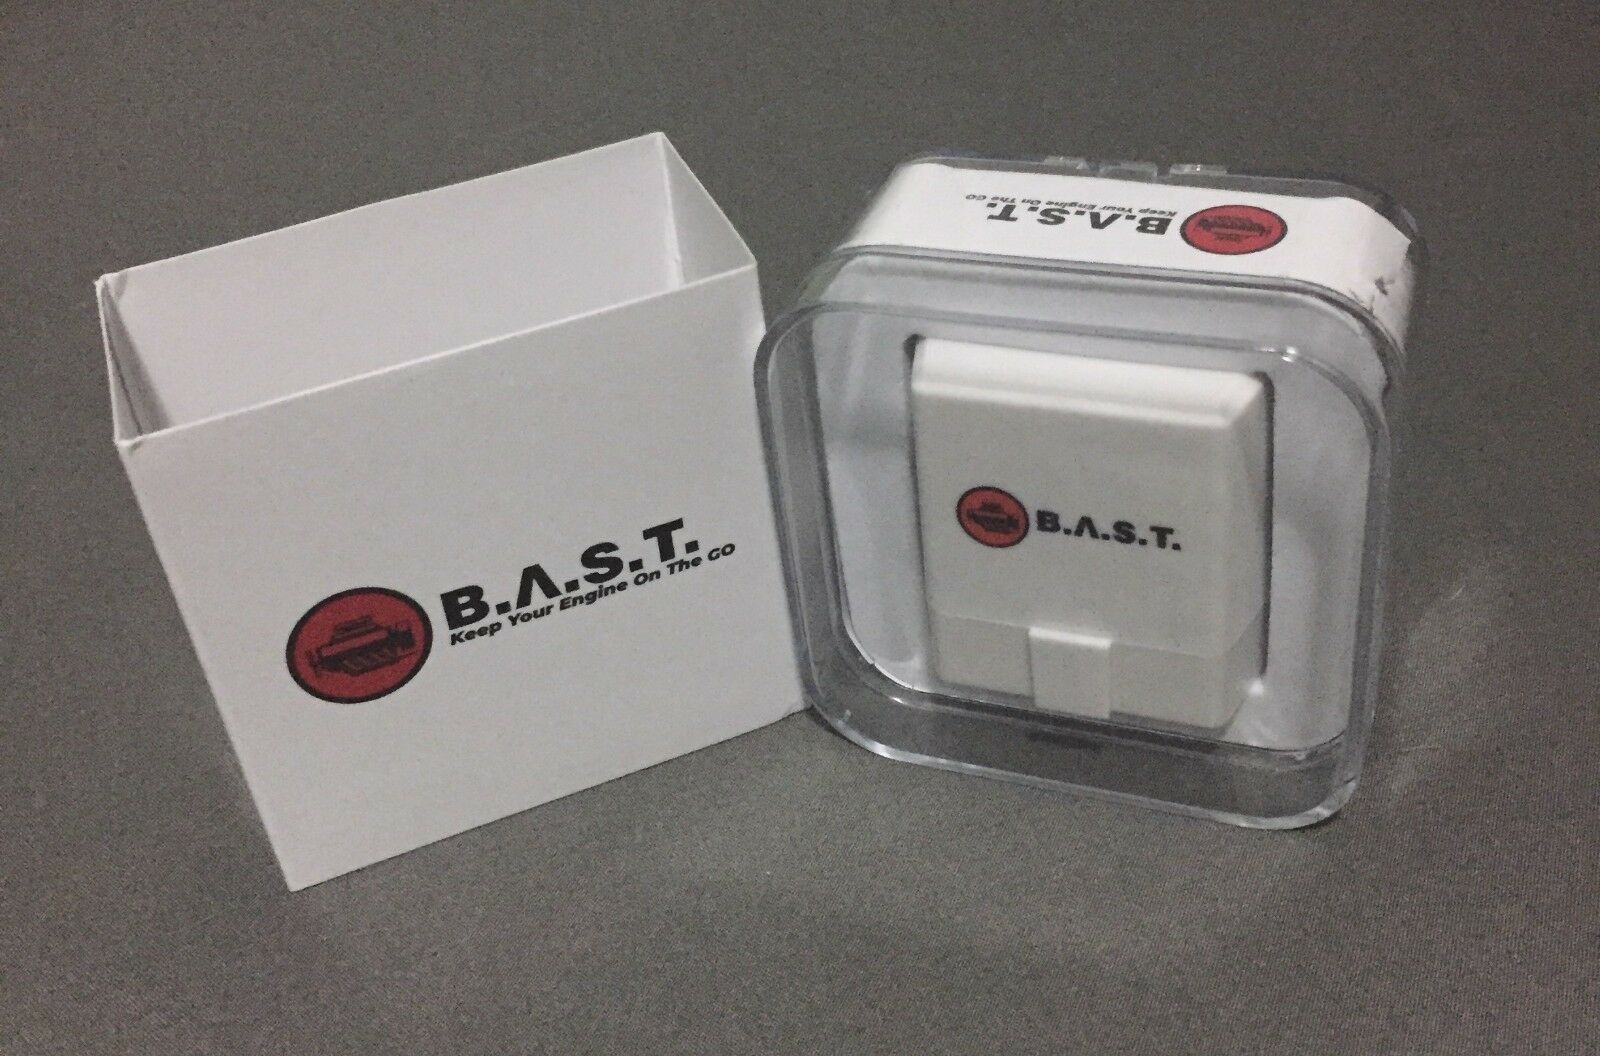 New Bast Obd-ii Car Diagnostic 'fixd' Scan Tool For Iosorandroid Fast Shipping